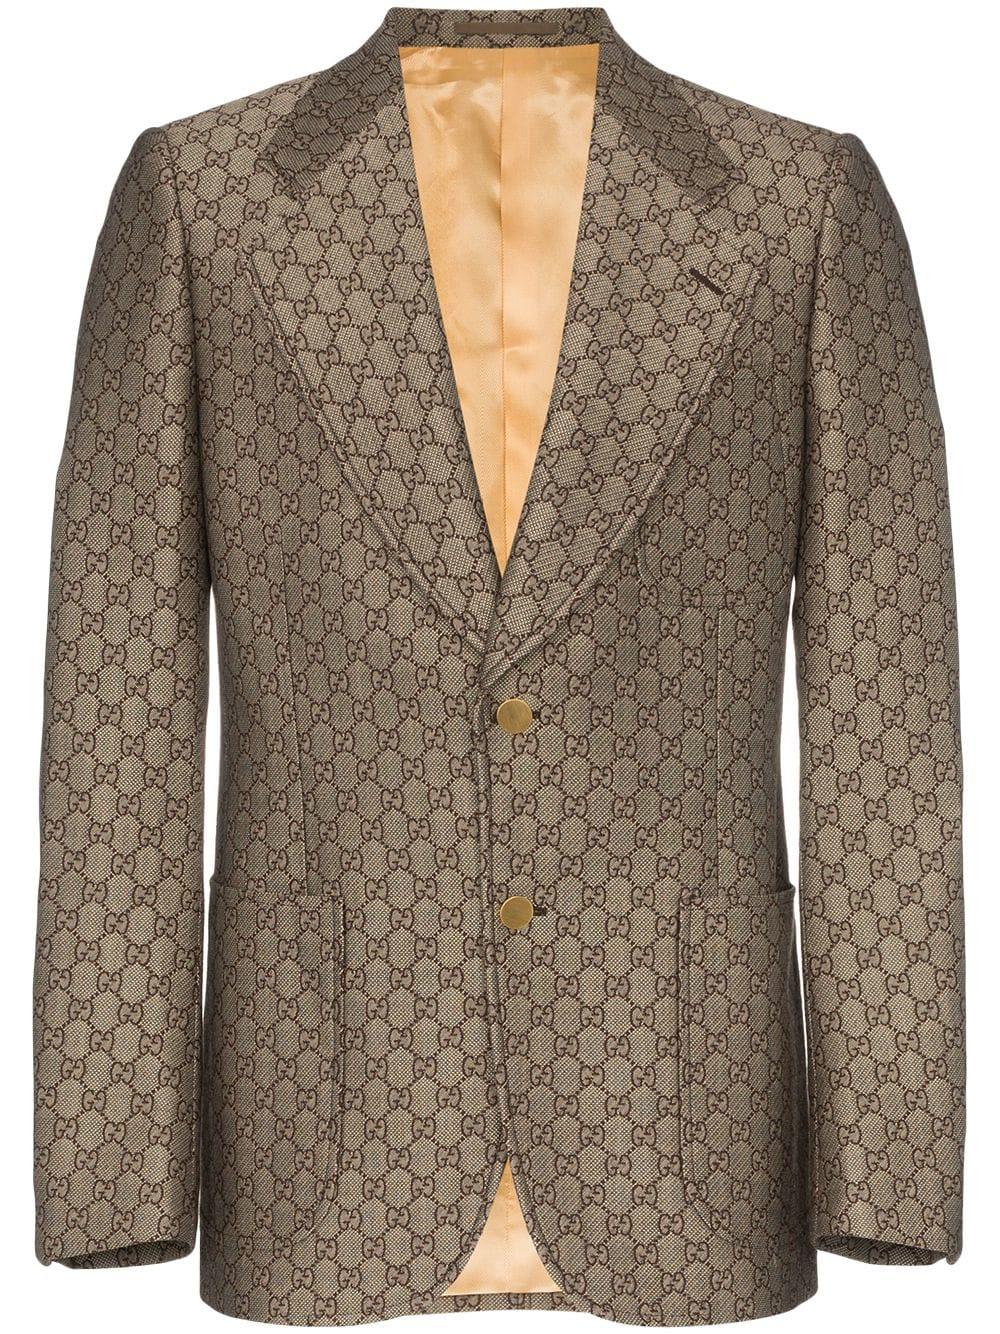 Gucci Cotton GG Wool Blend Logo Blazer in Brown for Men - Lyst